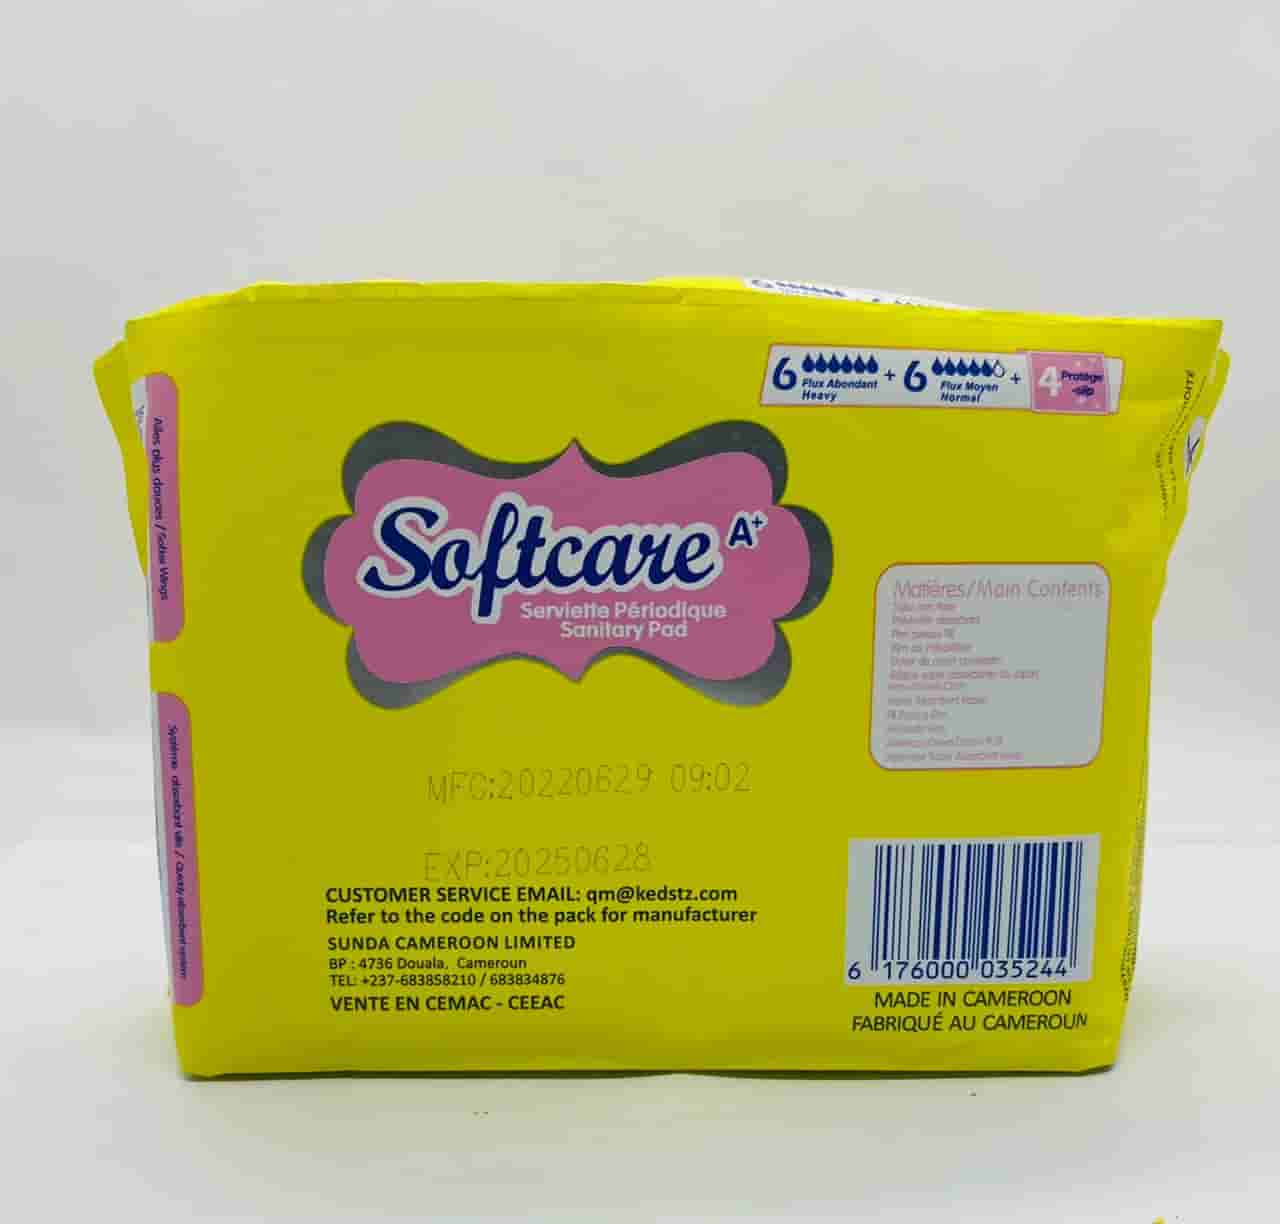 Softcare serviette periodique sanitary pad